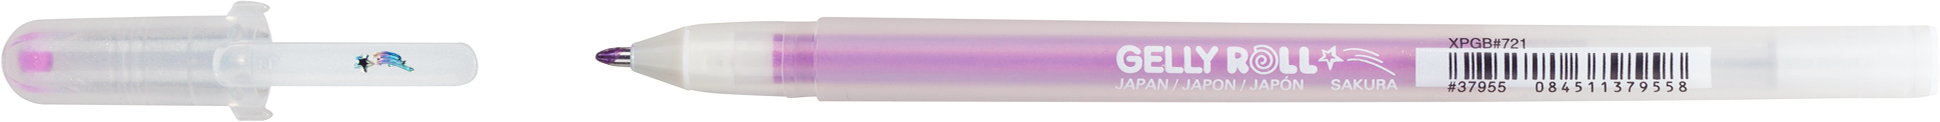 SAKURA Gelly Roll 0.5mm XPGB721 Stardust rosa Glitter